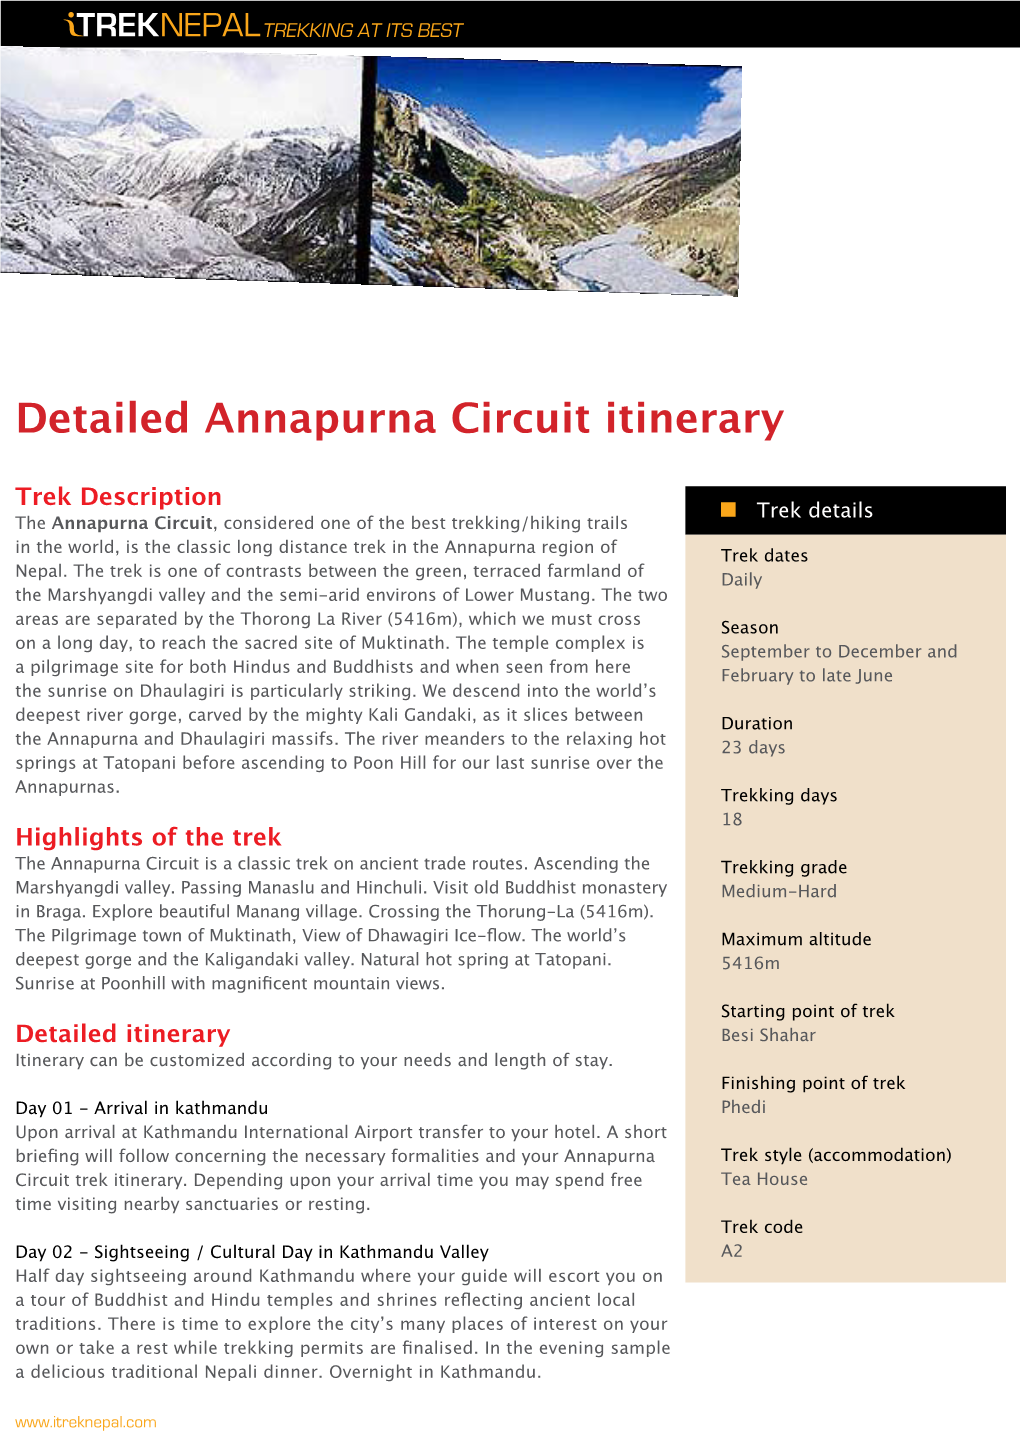 Detailed Annapurna Circuit Itinerary